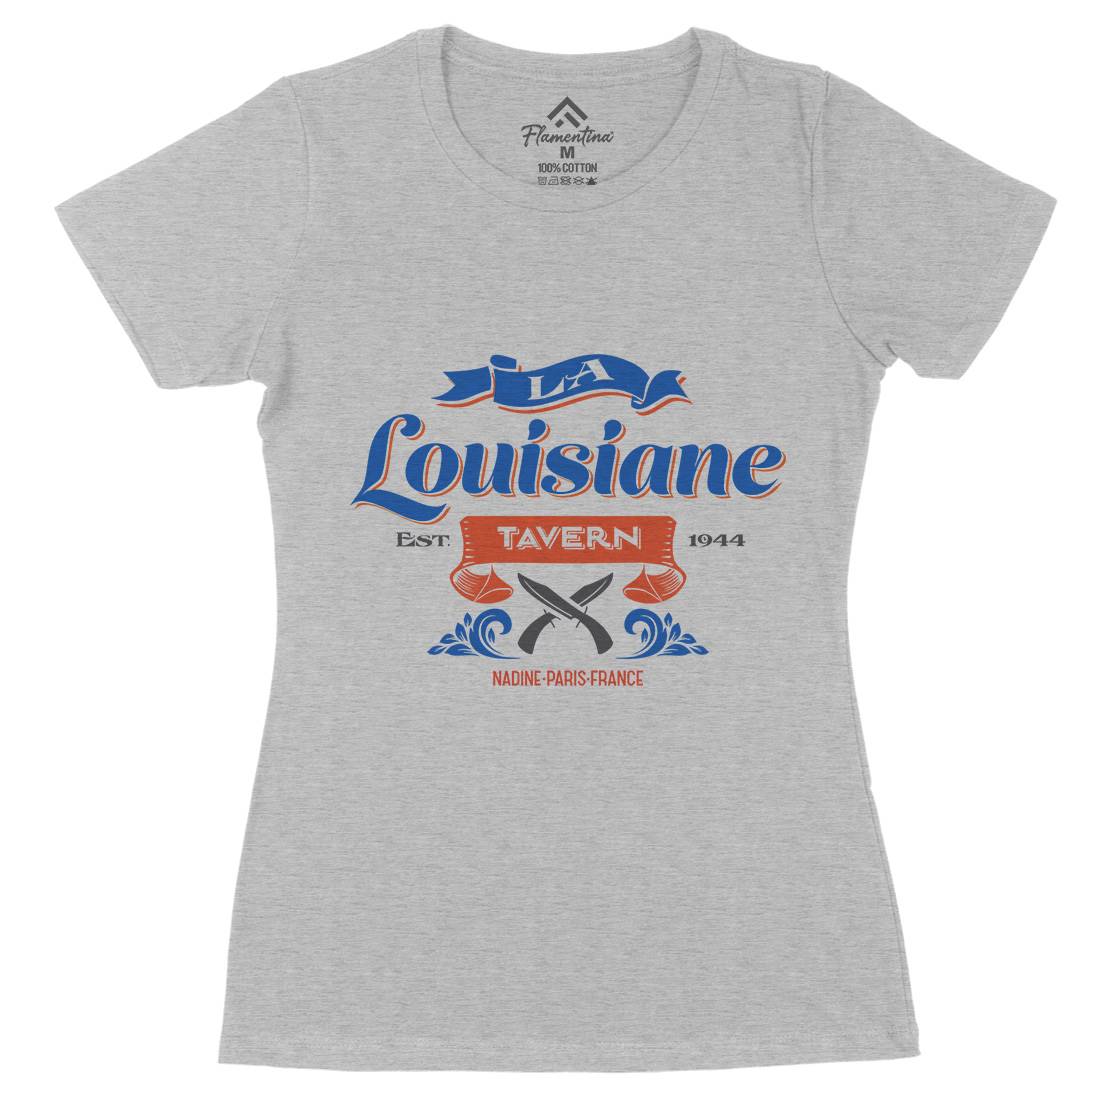 La Louisiane Tavern Womens Organic Crew Neck T-Shirt Food D317